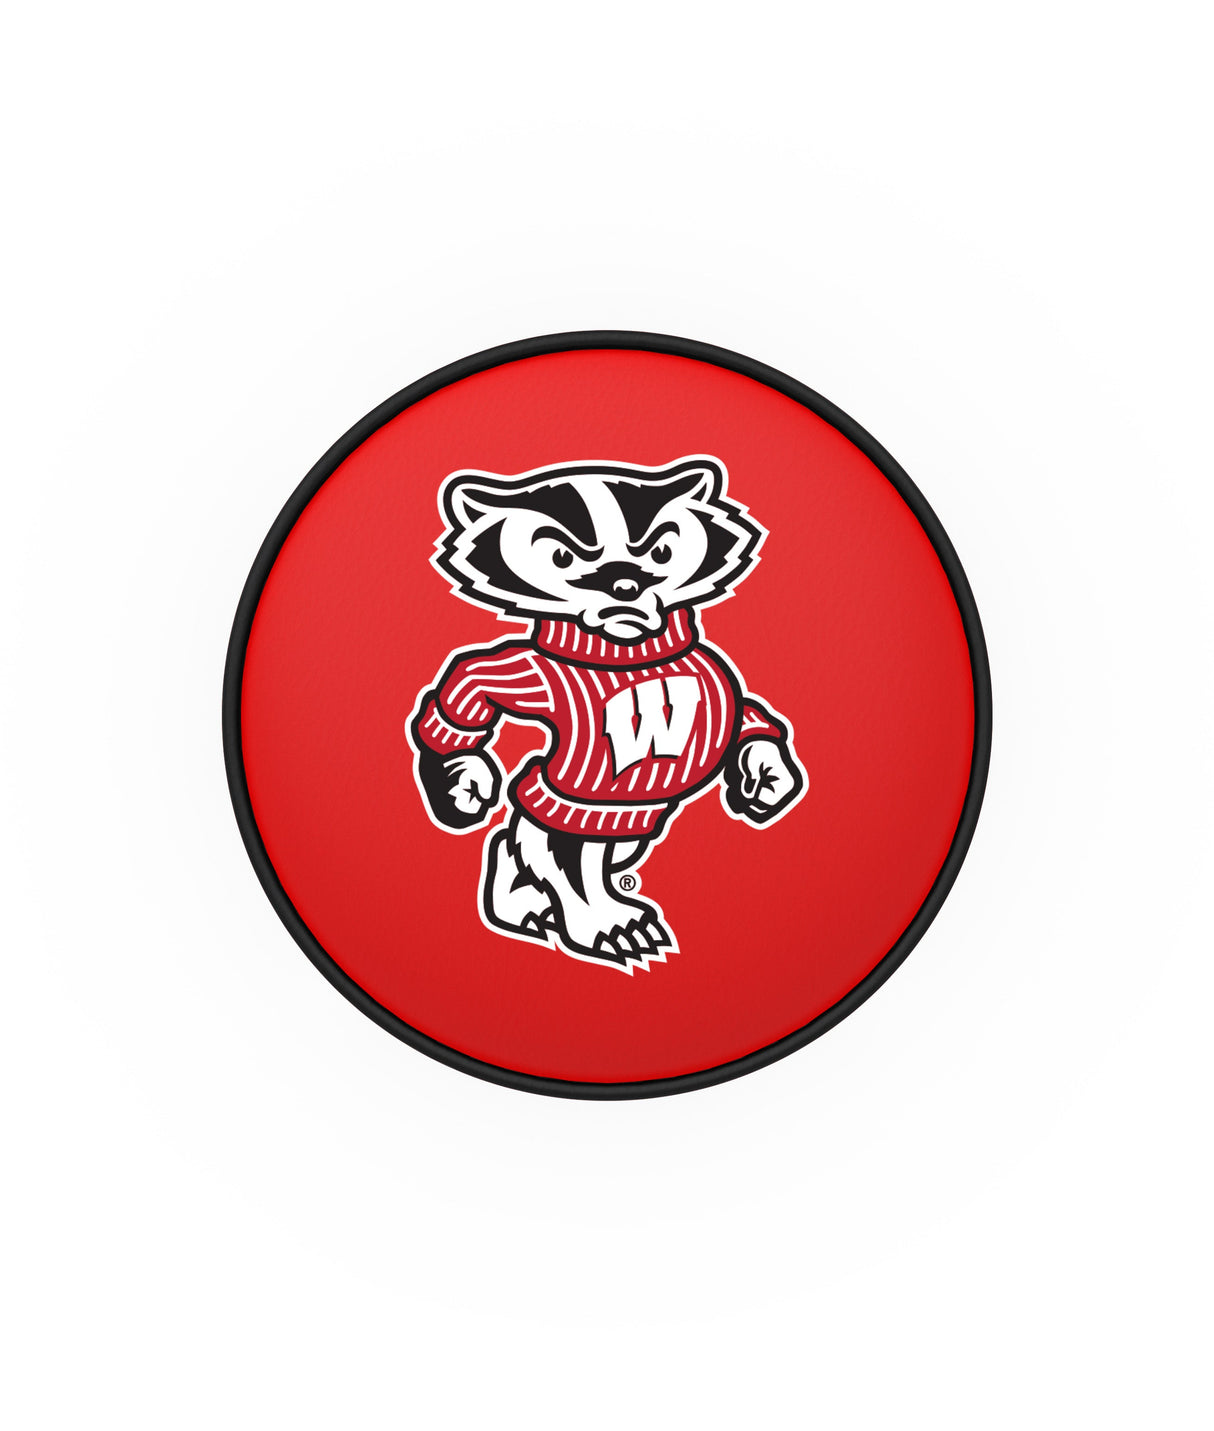 University of Wisconsin (Badger) L8B1 Backless Bar Stool | University of Wisconsin (Badger) Backless Counter Bar Stool